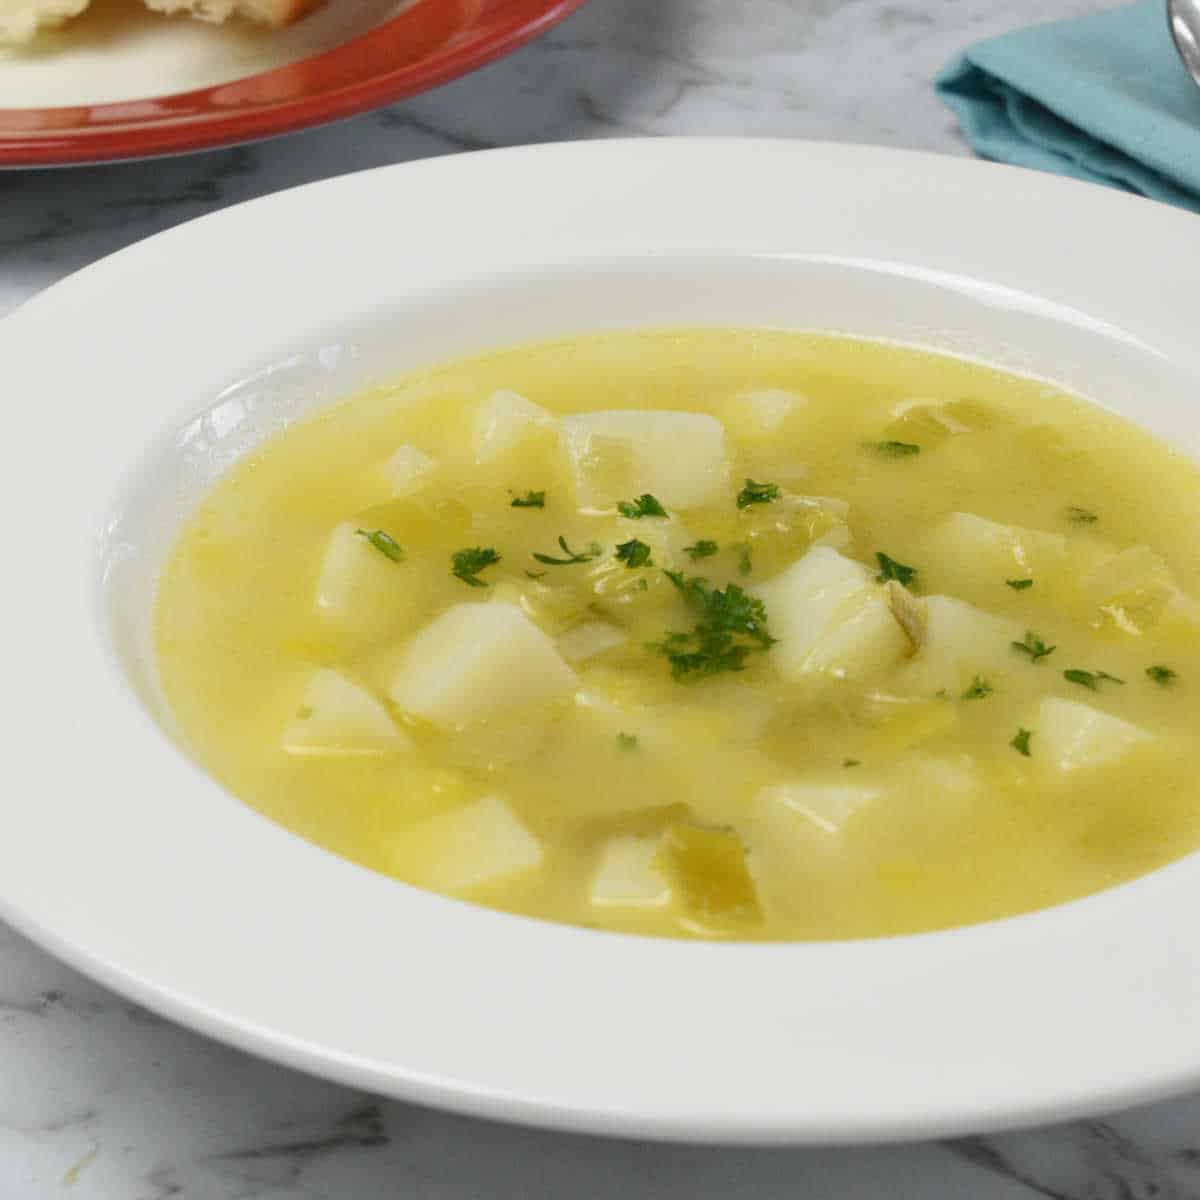 Homemade potato and leek soup.